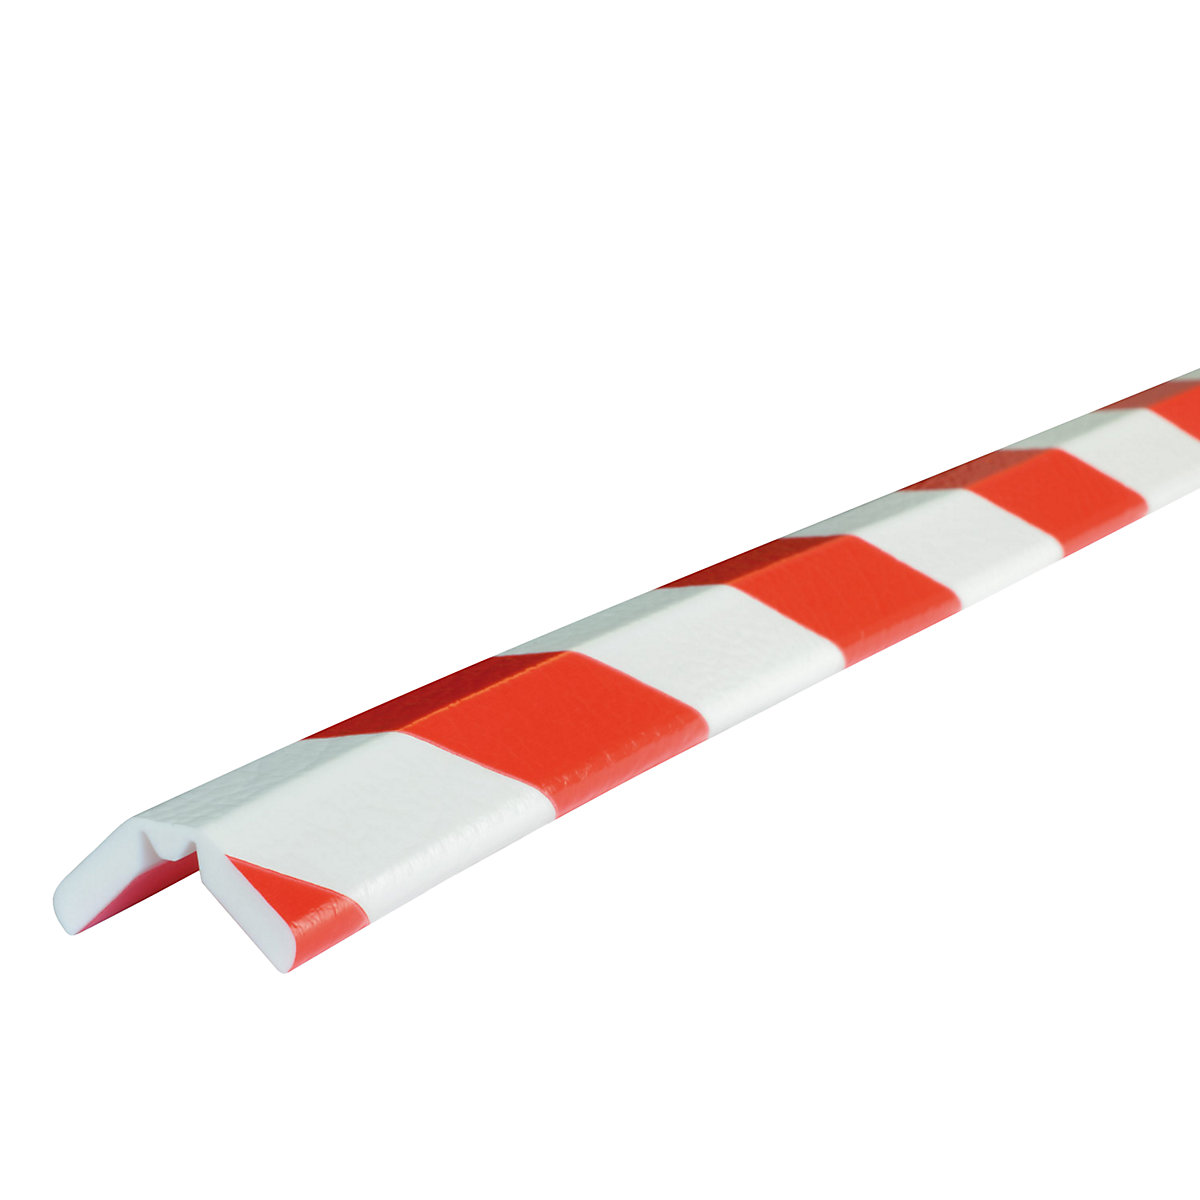 Knuffi®-hoekbescherming – SHG, type W, stuk van 1 m, rood/wit-12